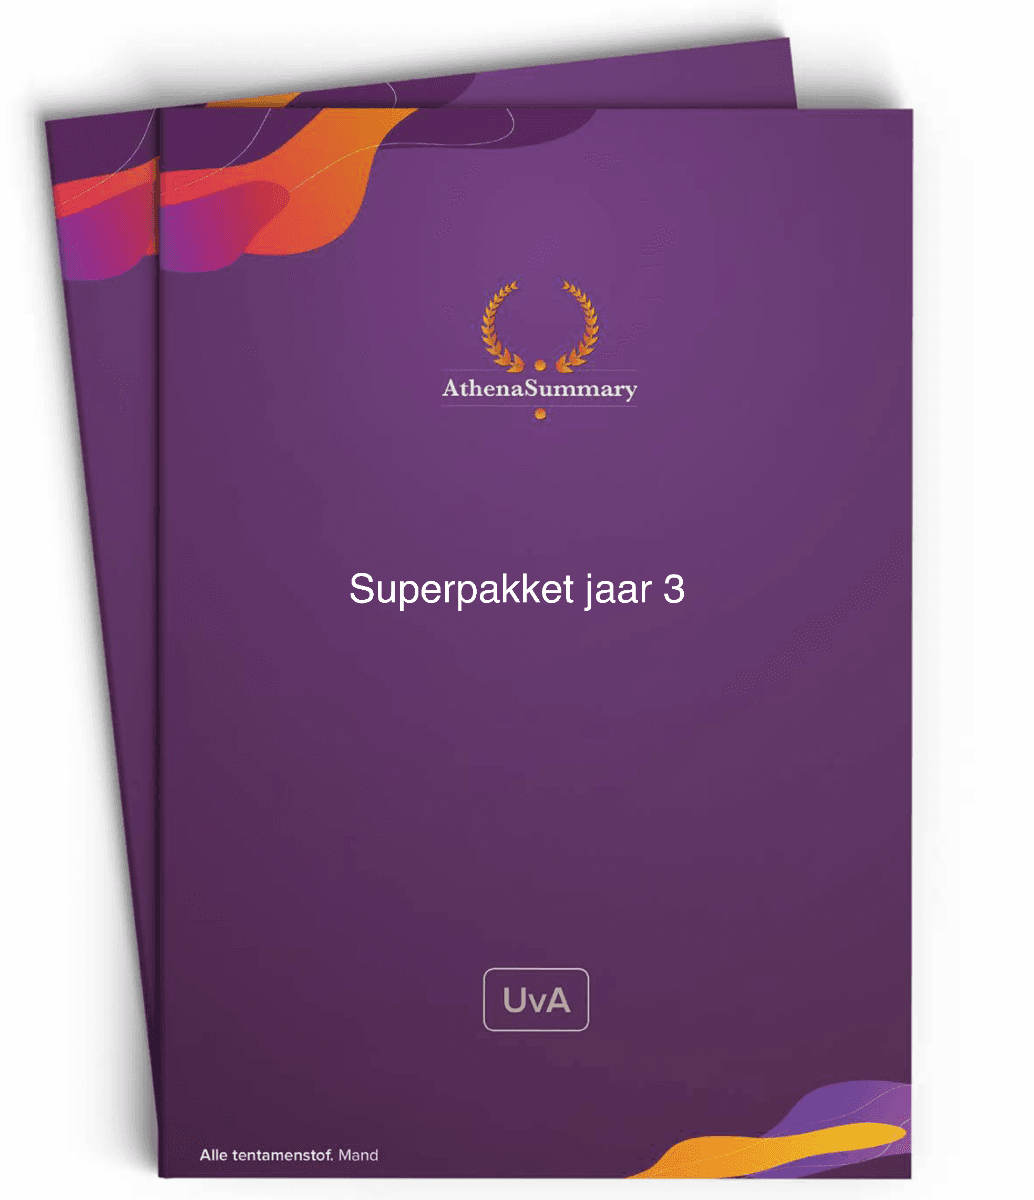 Superpakket jaar 3 